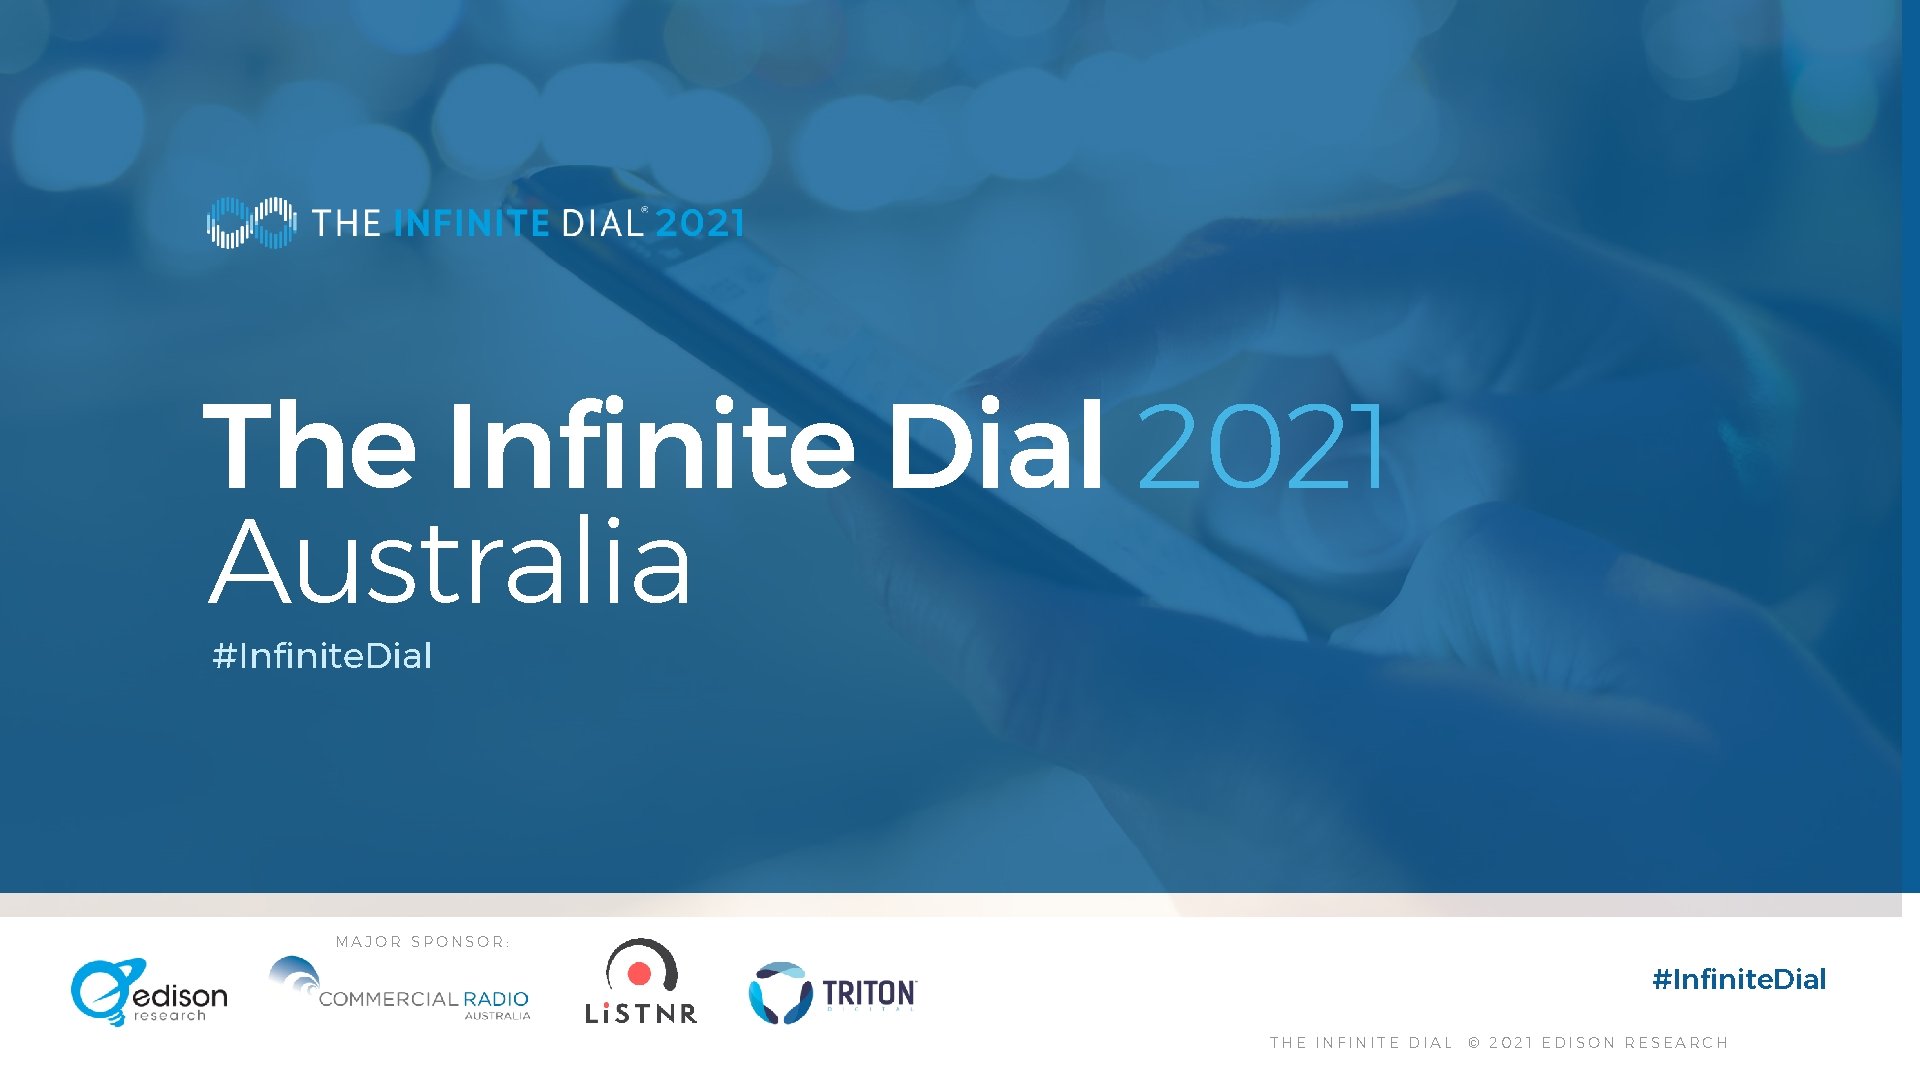 The Infinite Dial 2021 Australia #Infinite. Dial MAJOR SPONSOR: #Infinite. Dial THE INFINITE DIAL